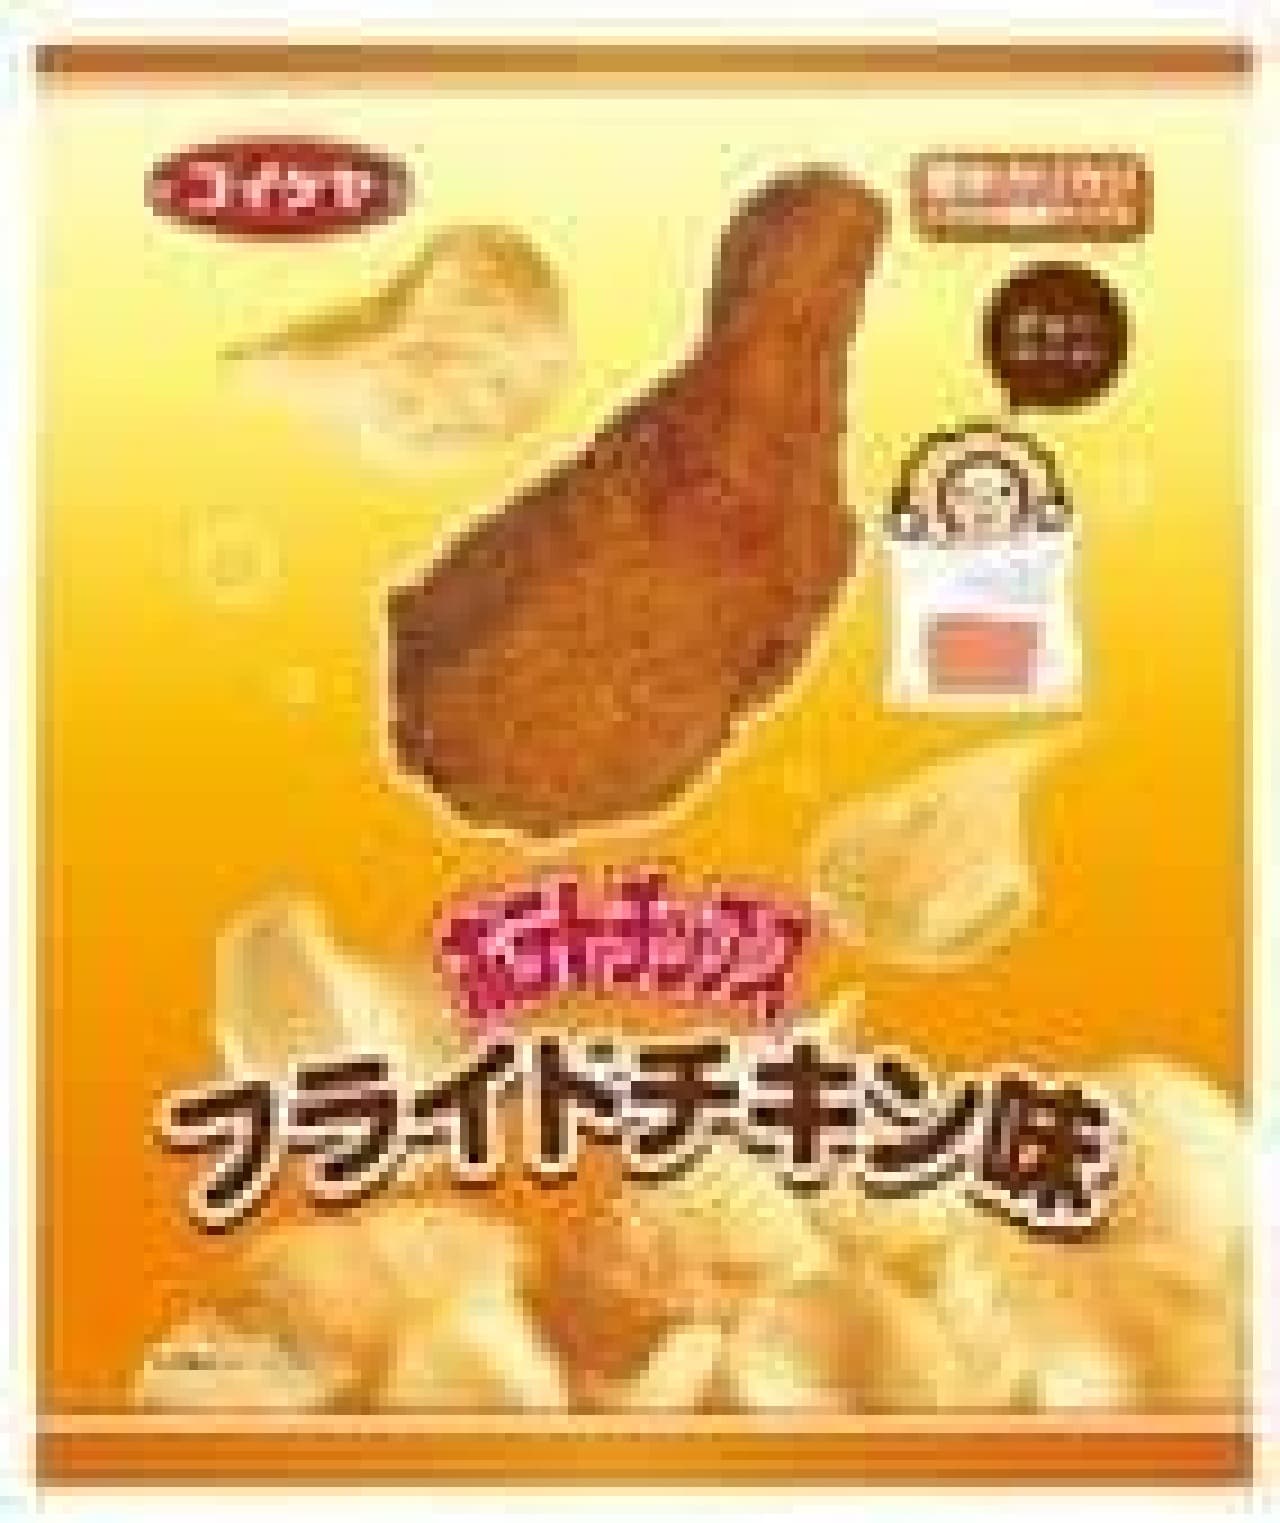 Potato chips fried chicken flavor (image)